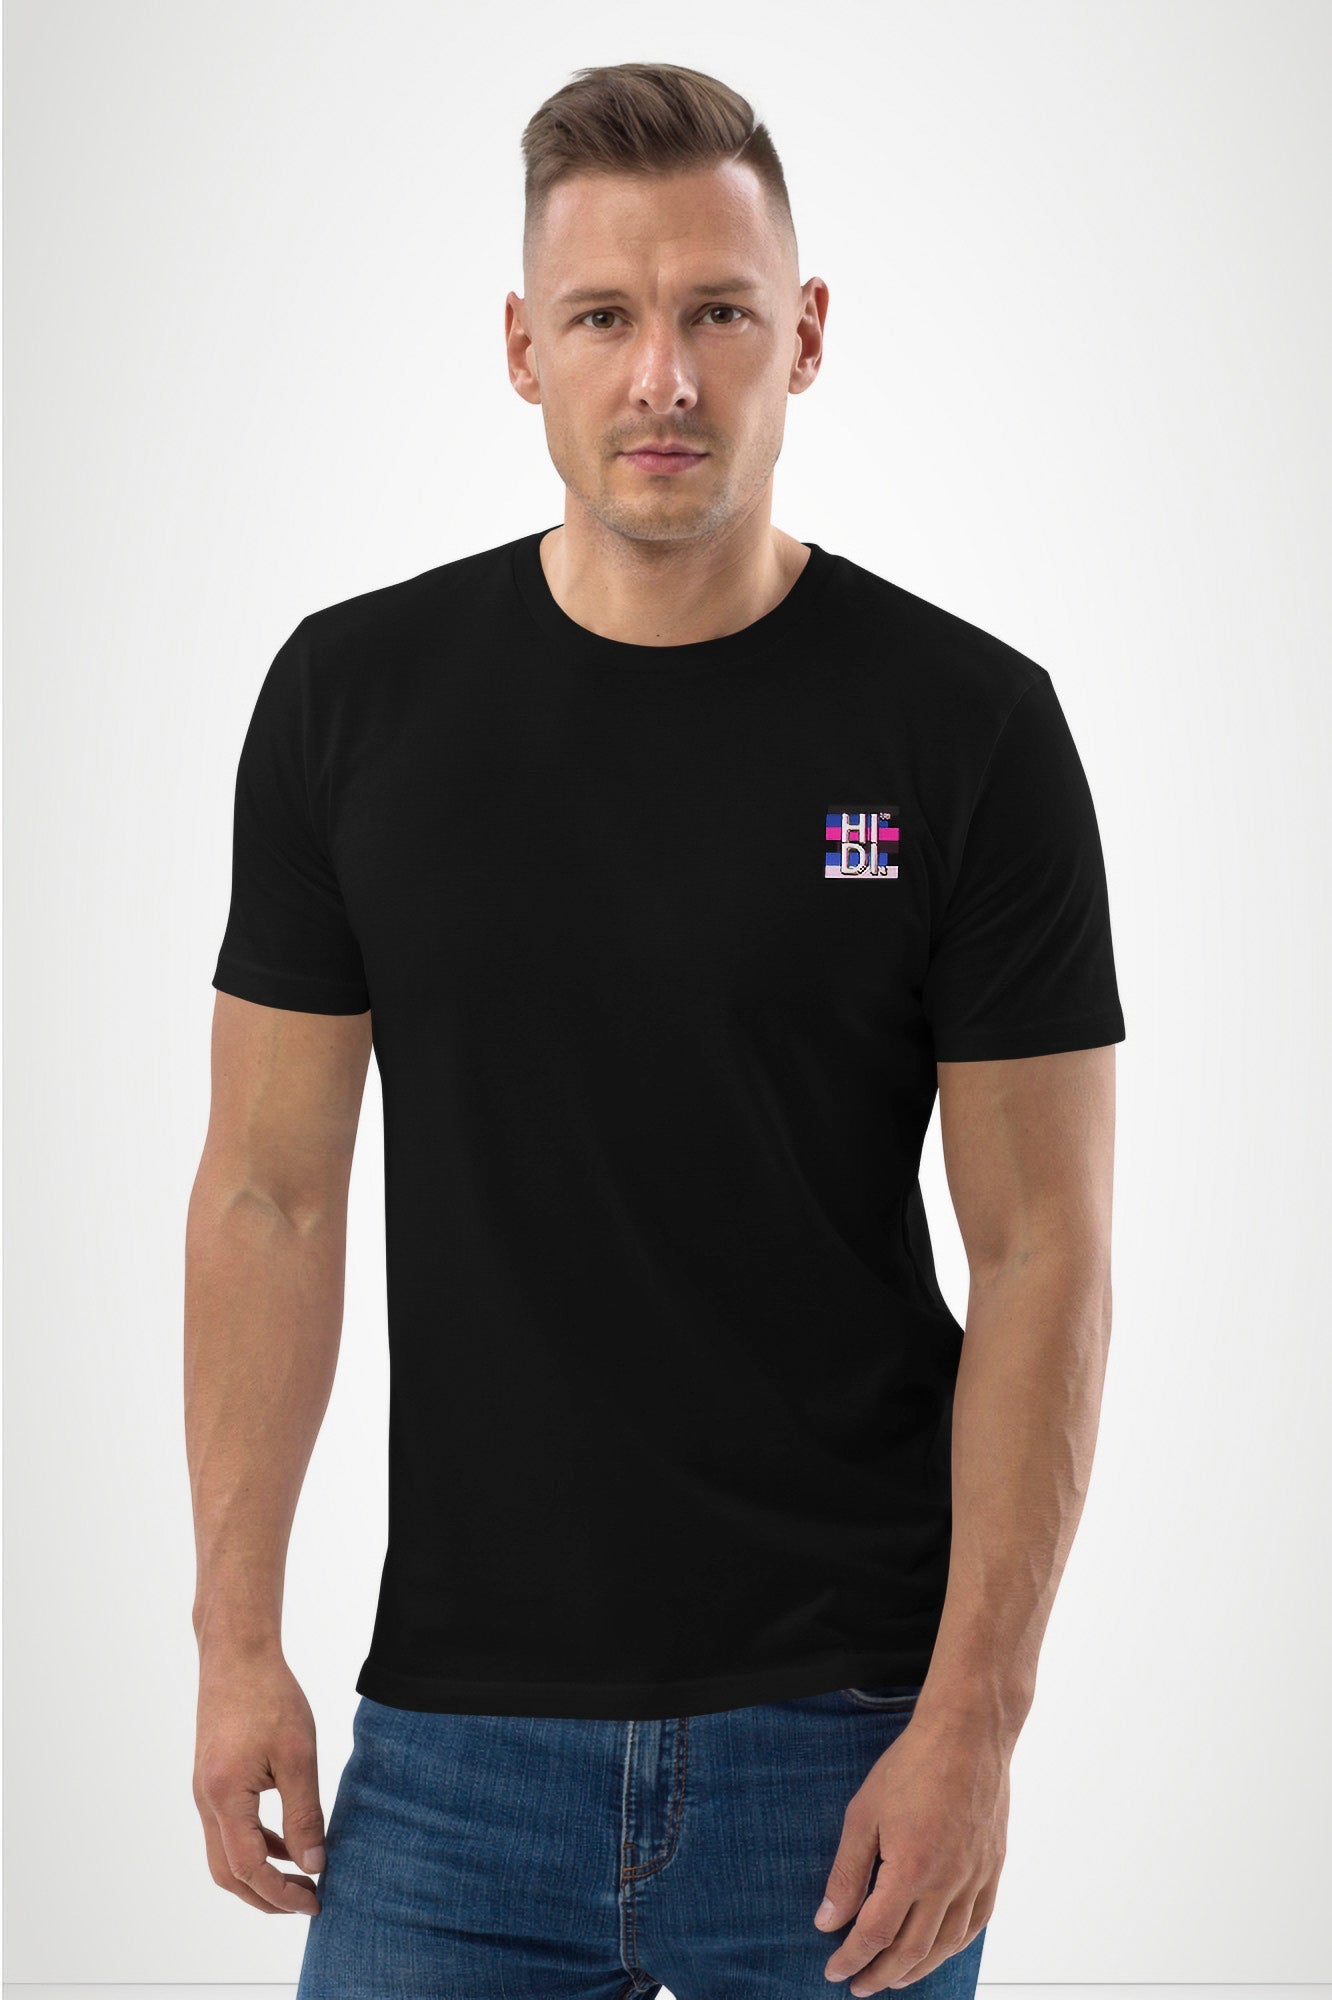 Stay Liquid Eco t-shirt in black Shirts & Tops HITDIFFERENT